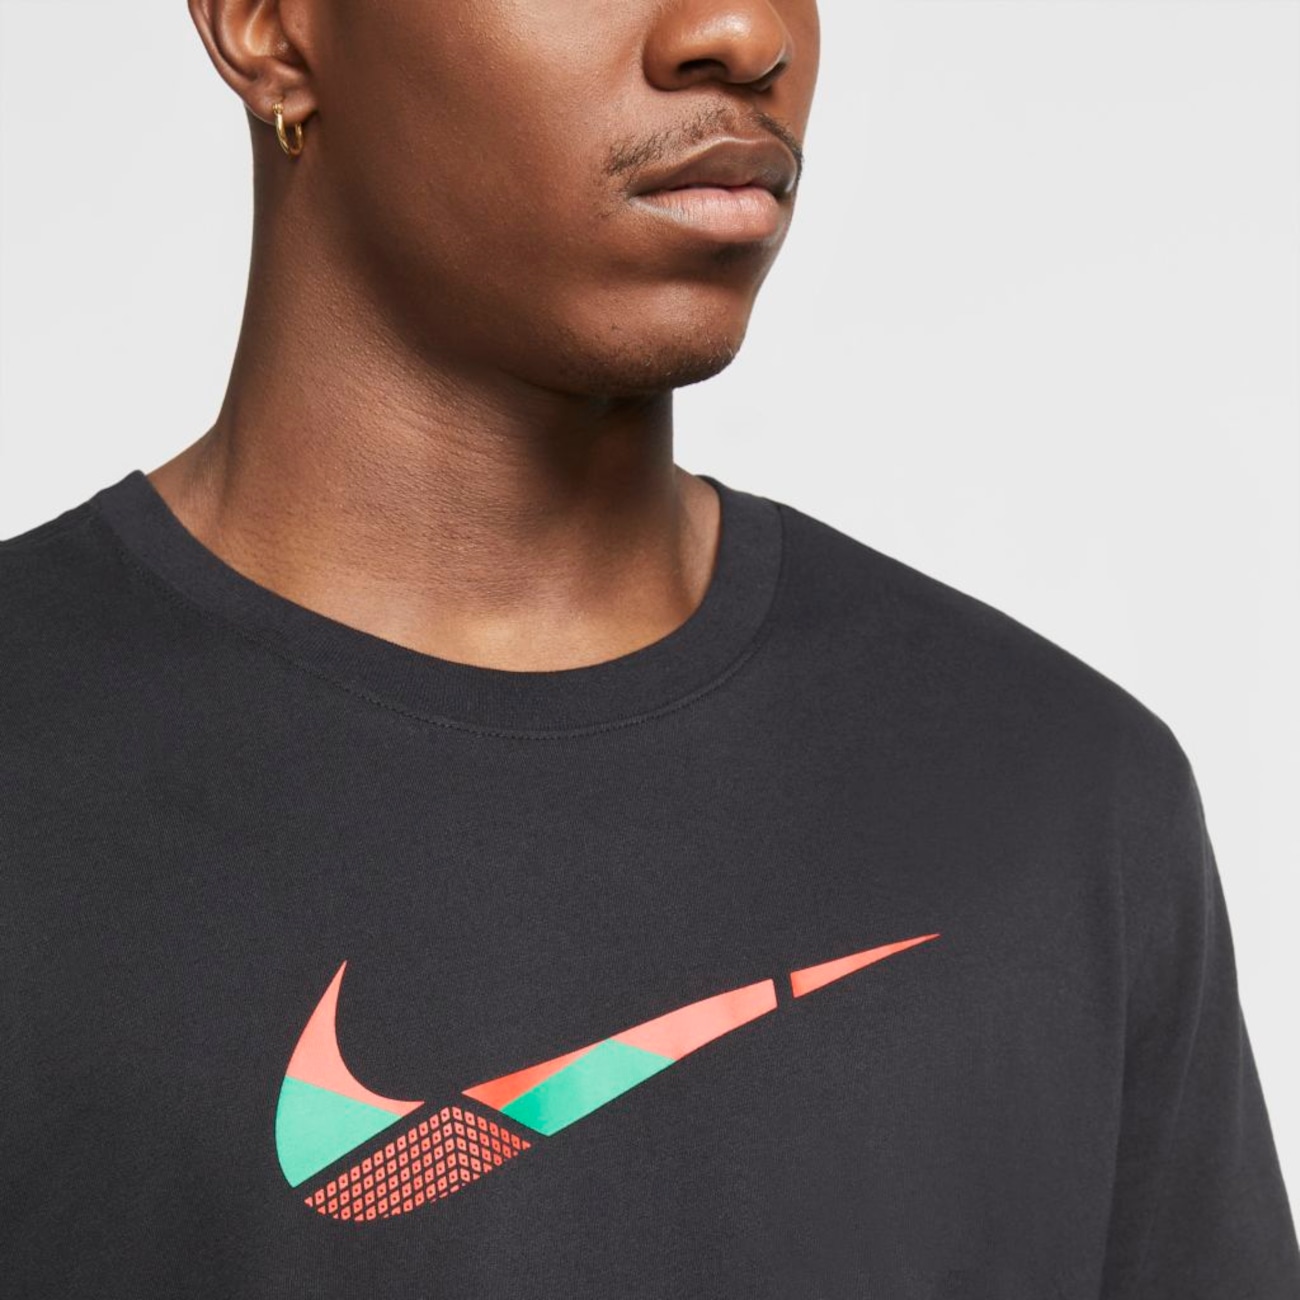 Camiseta Nike Team Kenya Dri-FIT Masculina - Foto 4